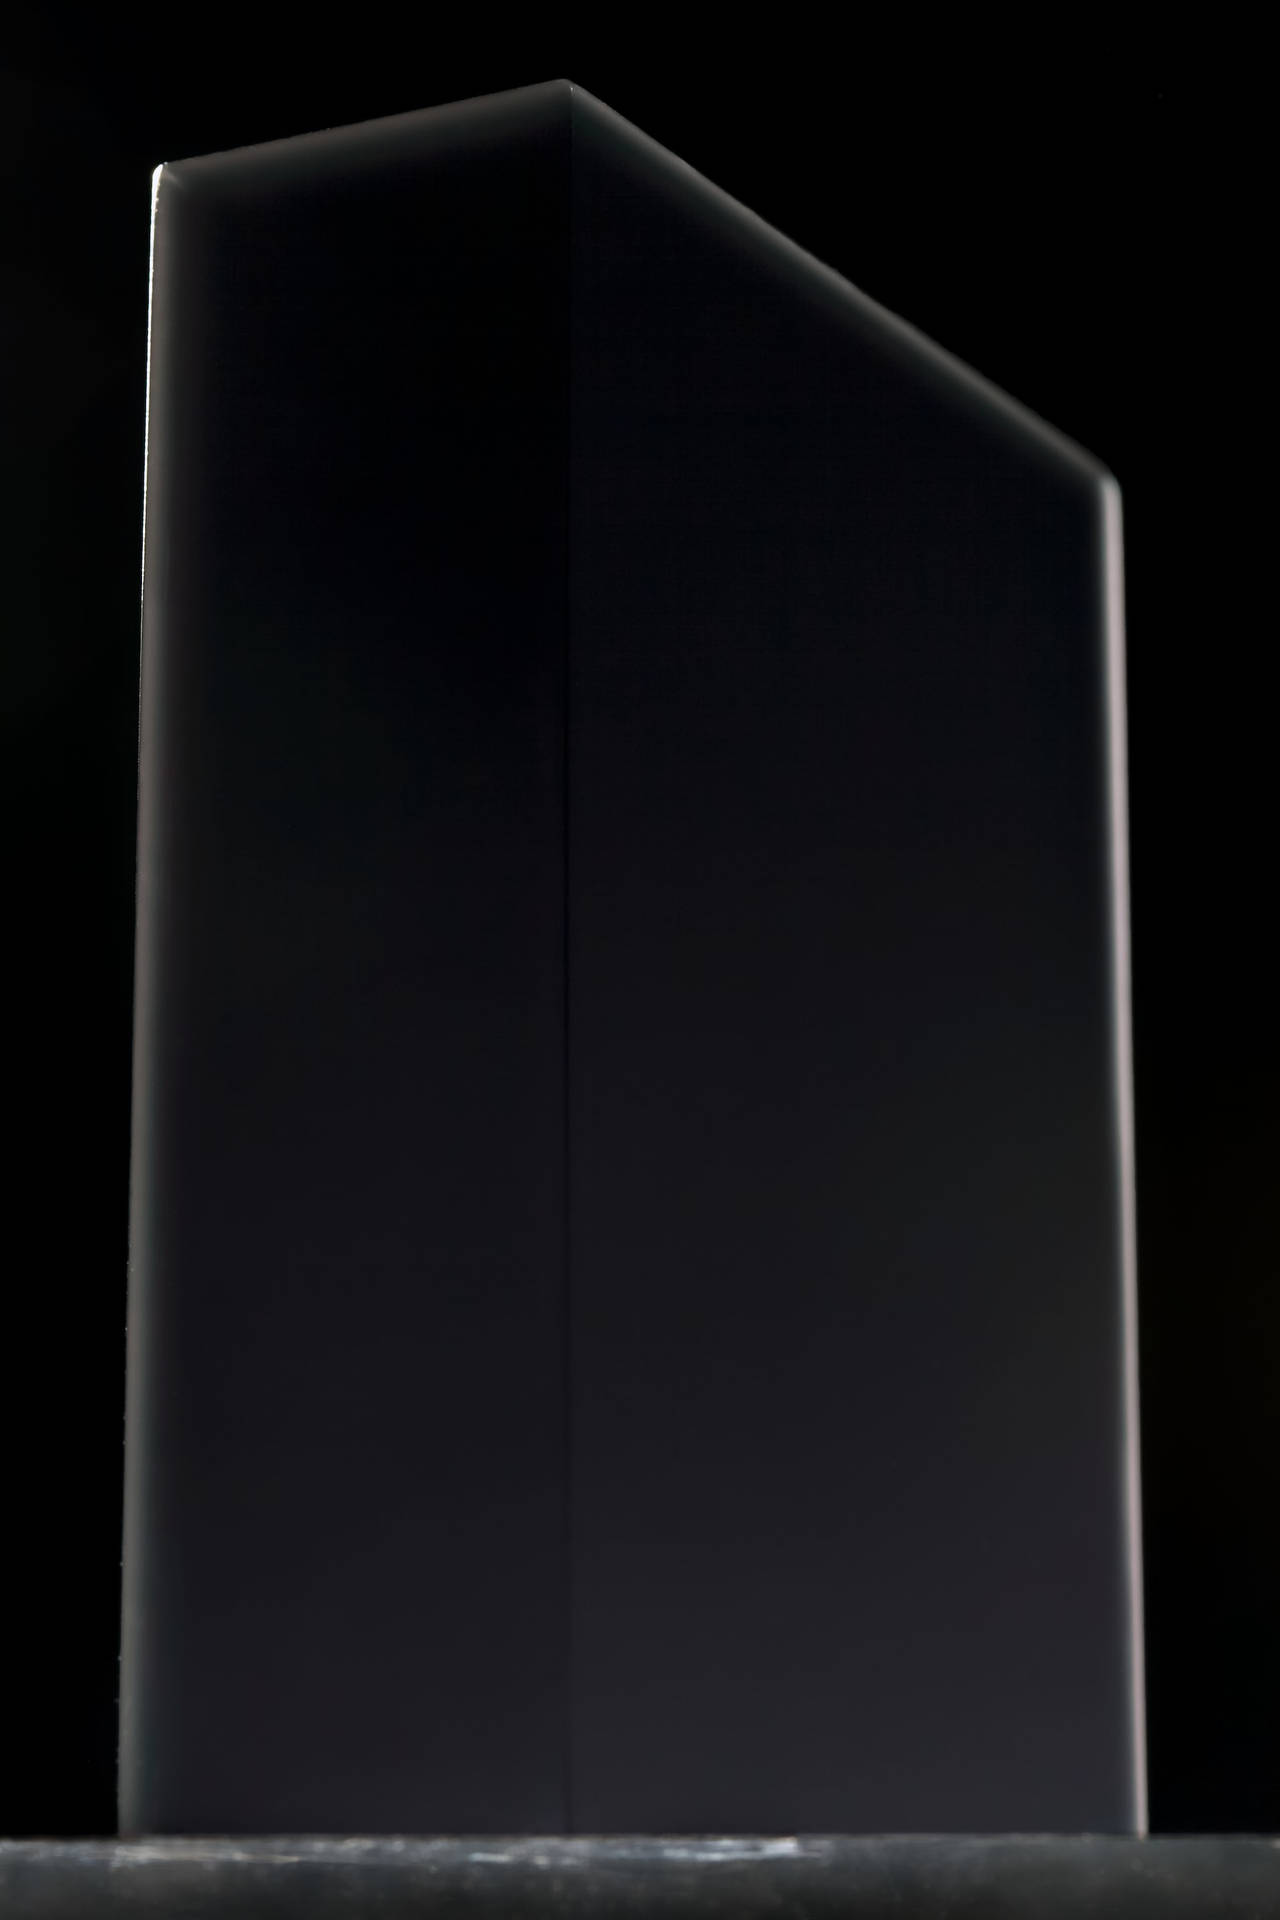 Monolith Black Aesthetic Tumblr Iphone